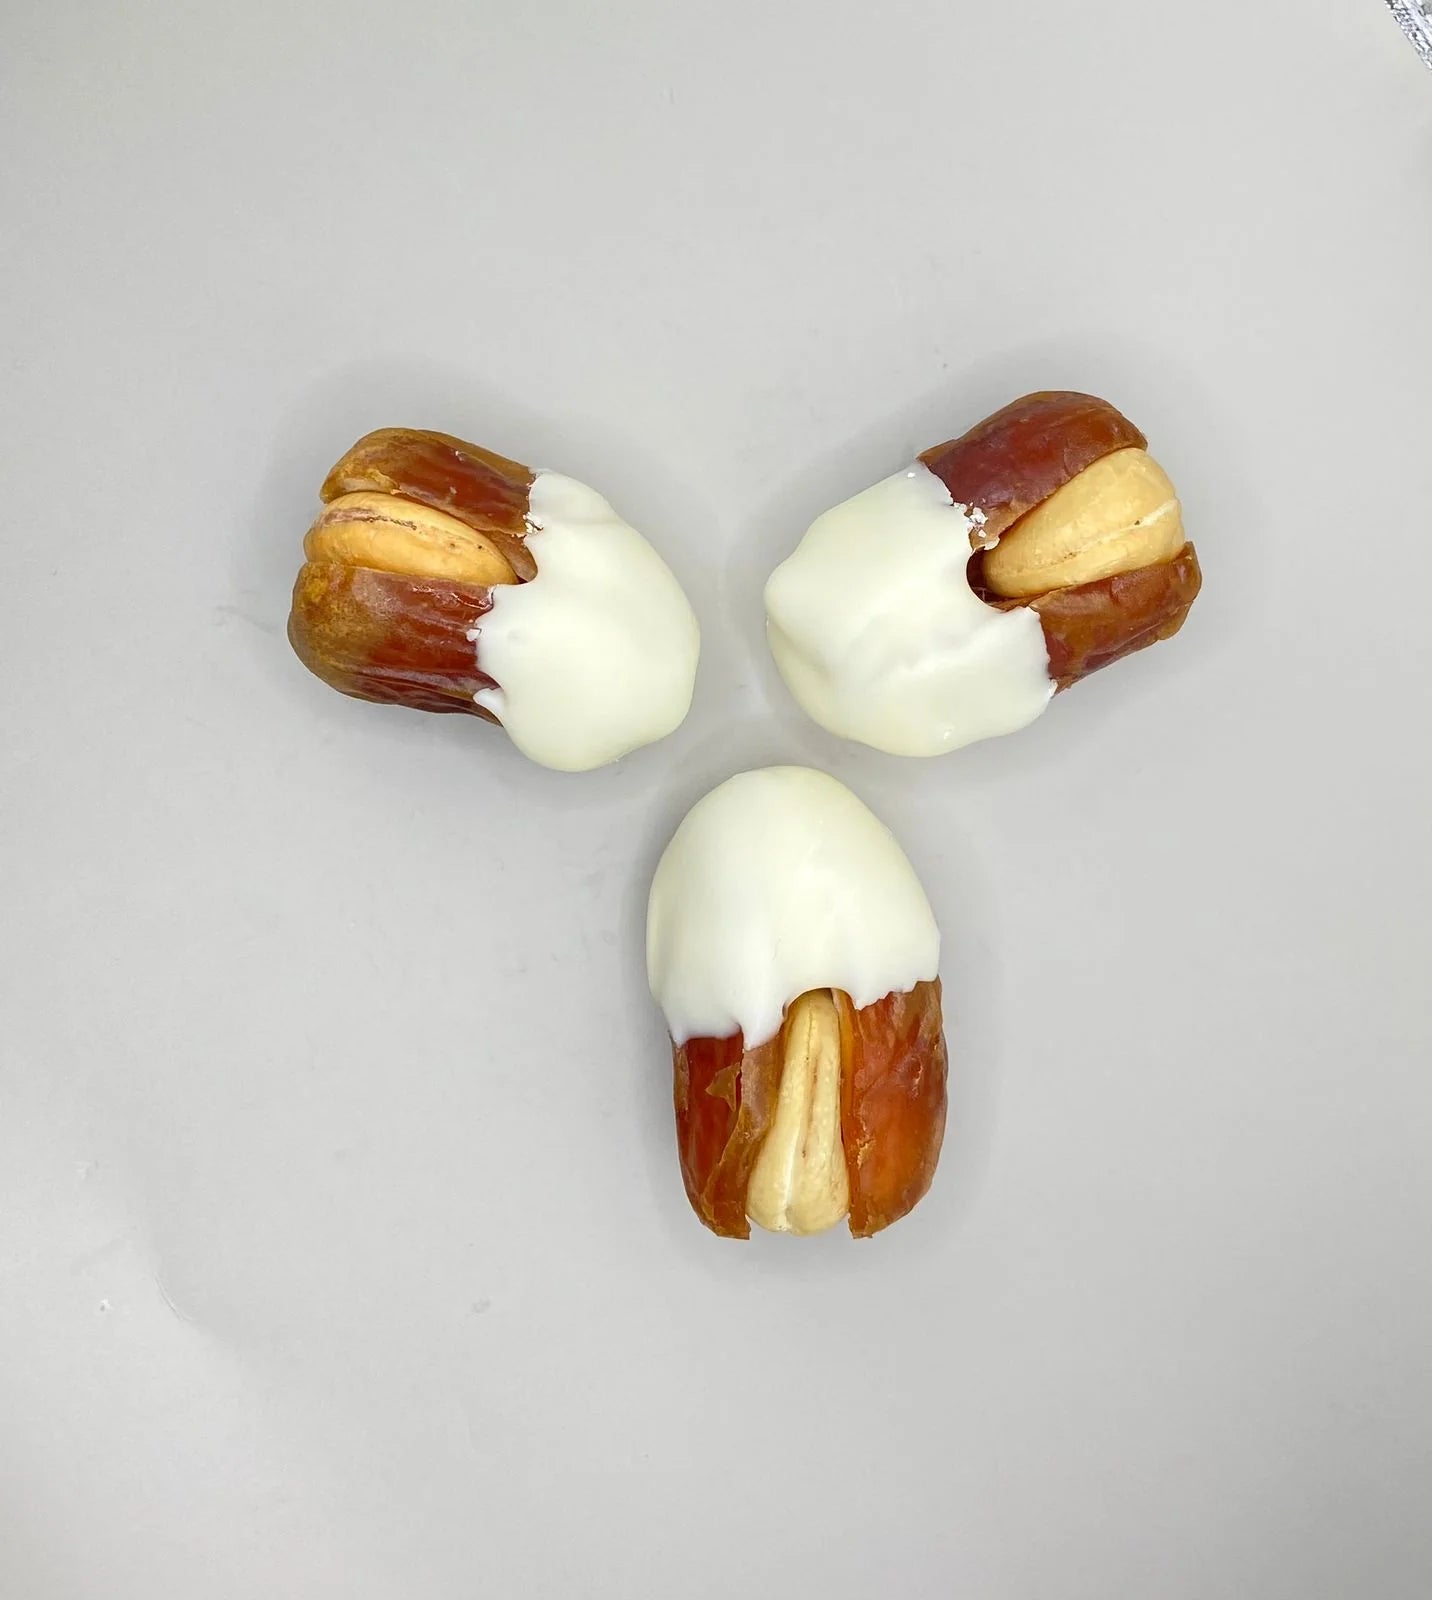 Vanilla Chocolate Dates Stuffed With Nuts